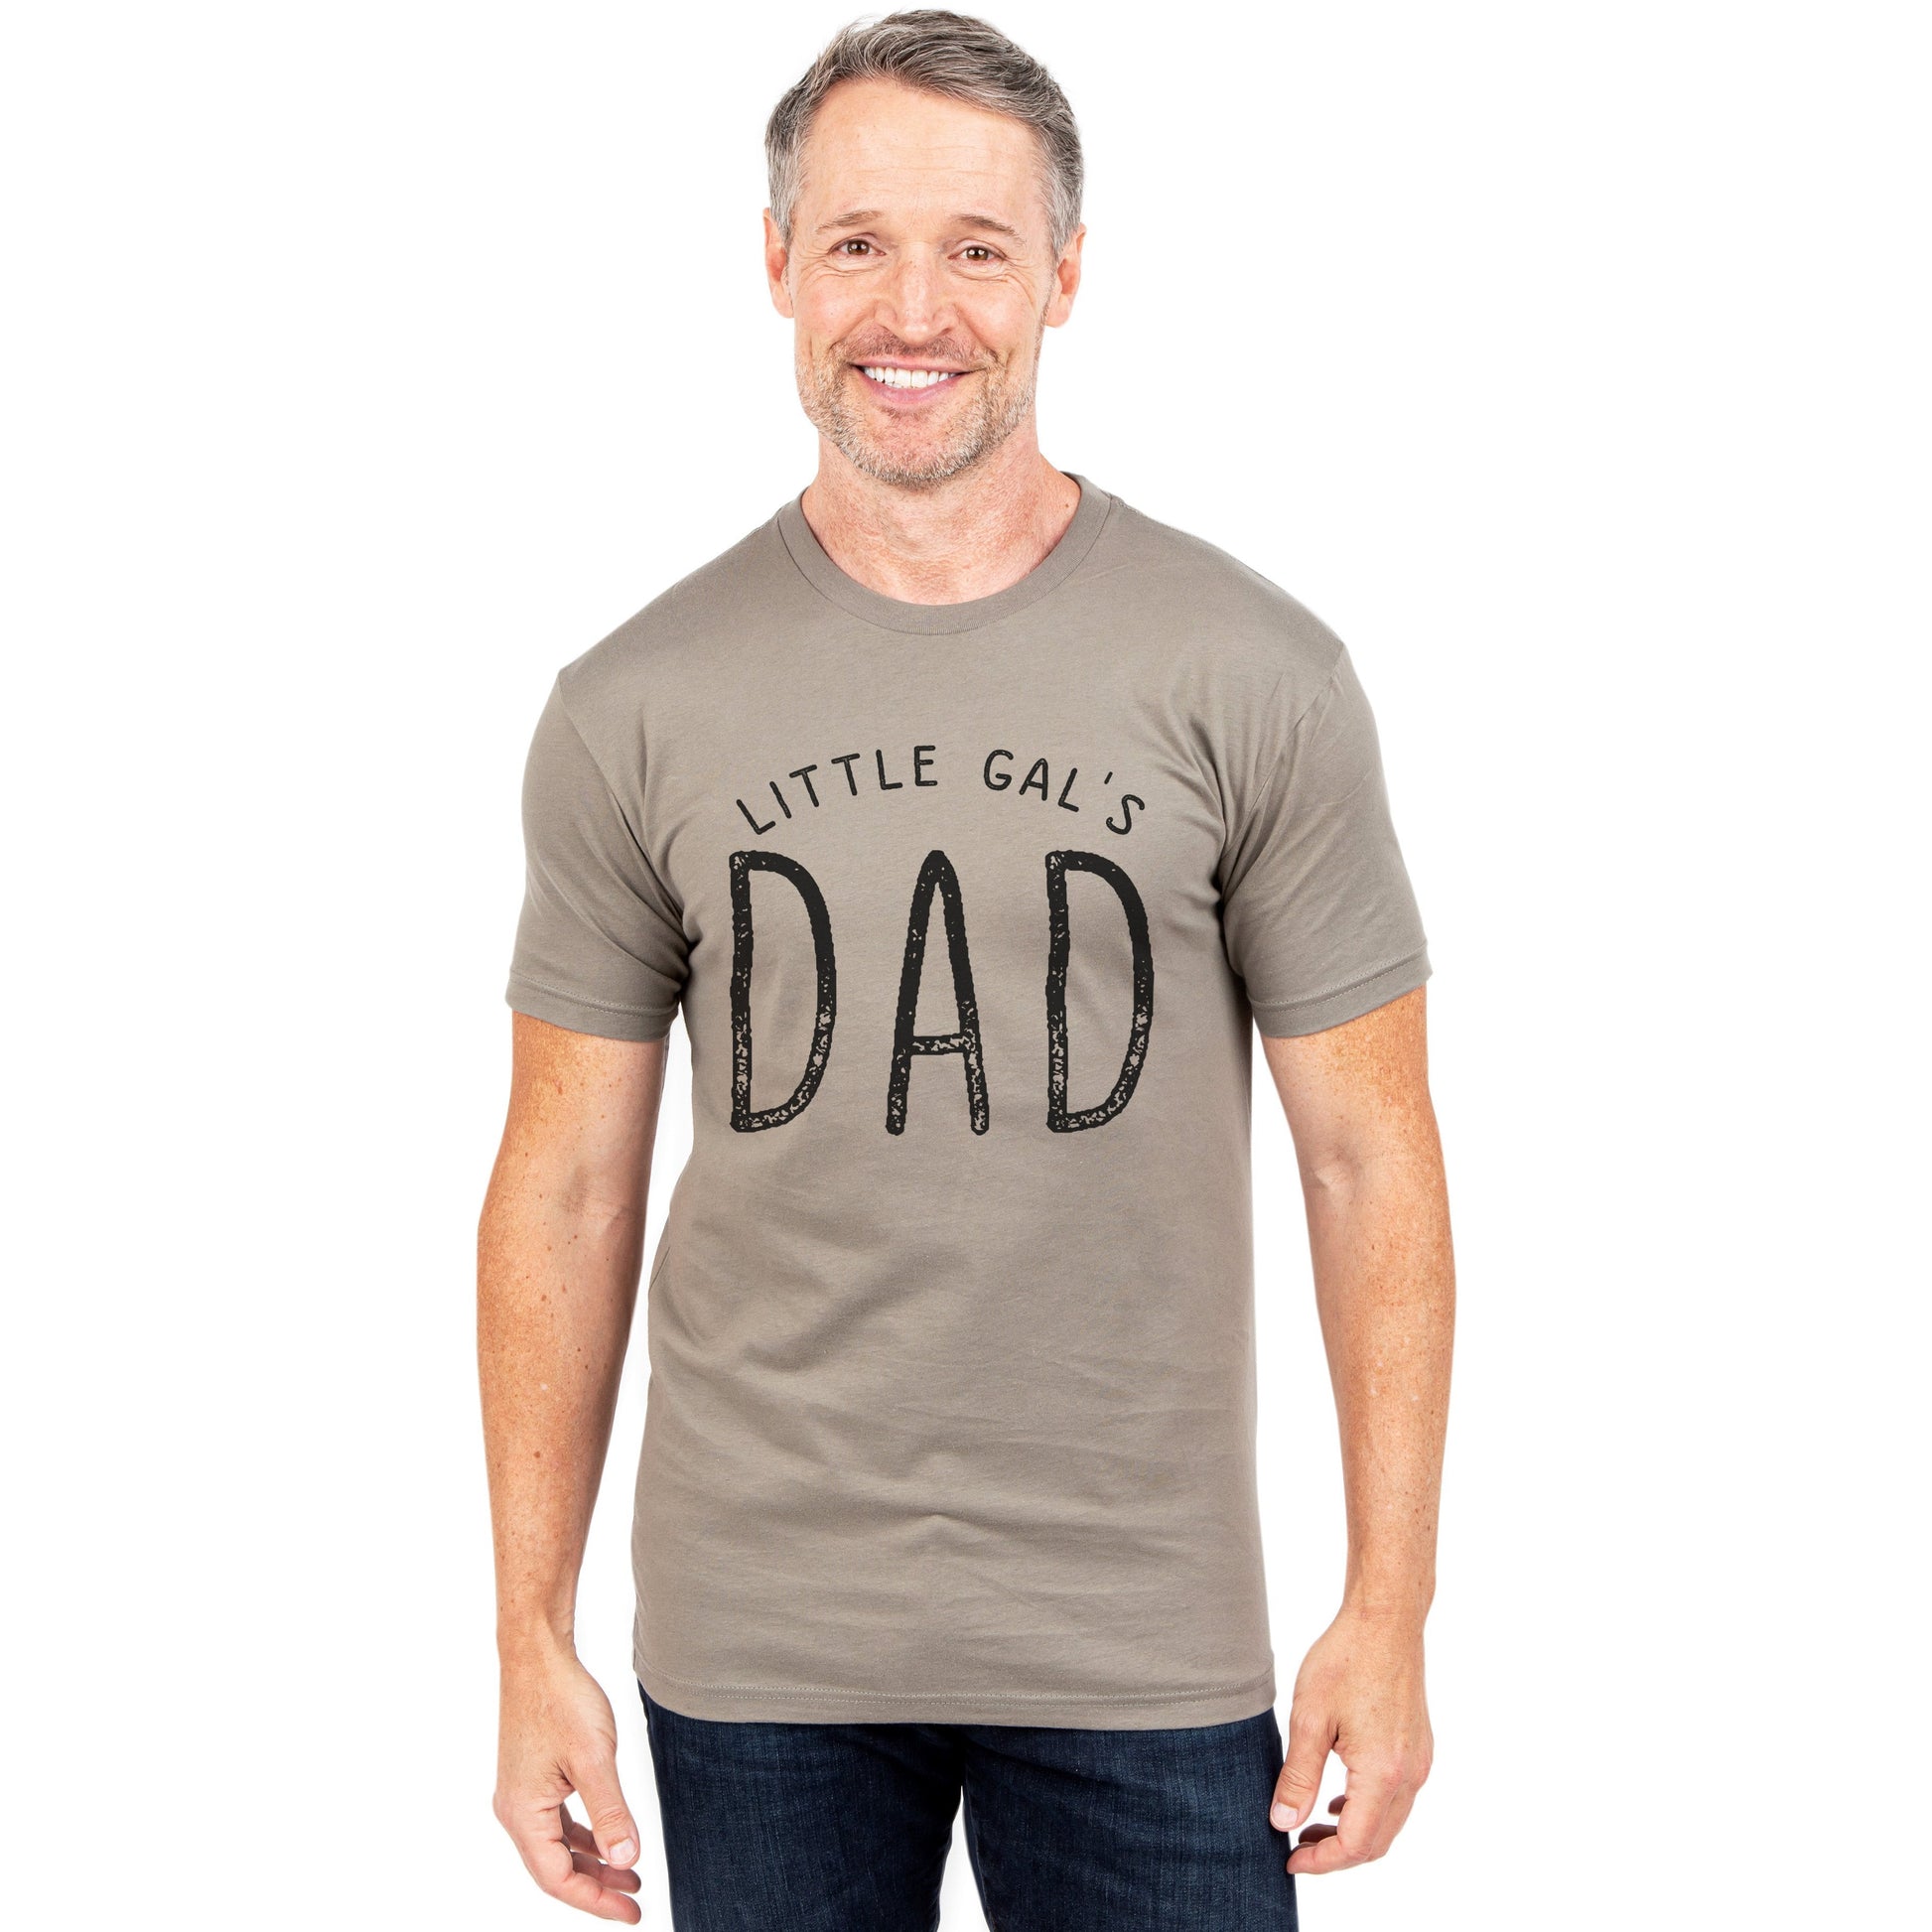 Lil Gal's Dad Military Grey Printed Graphic Men's Crew T-Shirt Tee Model